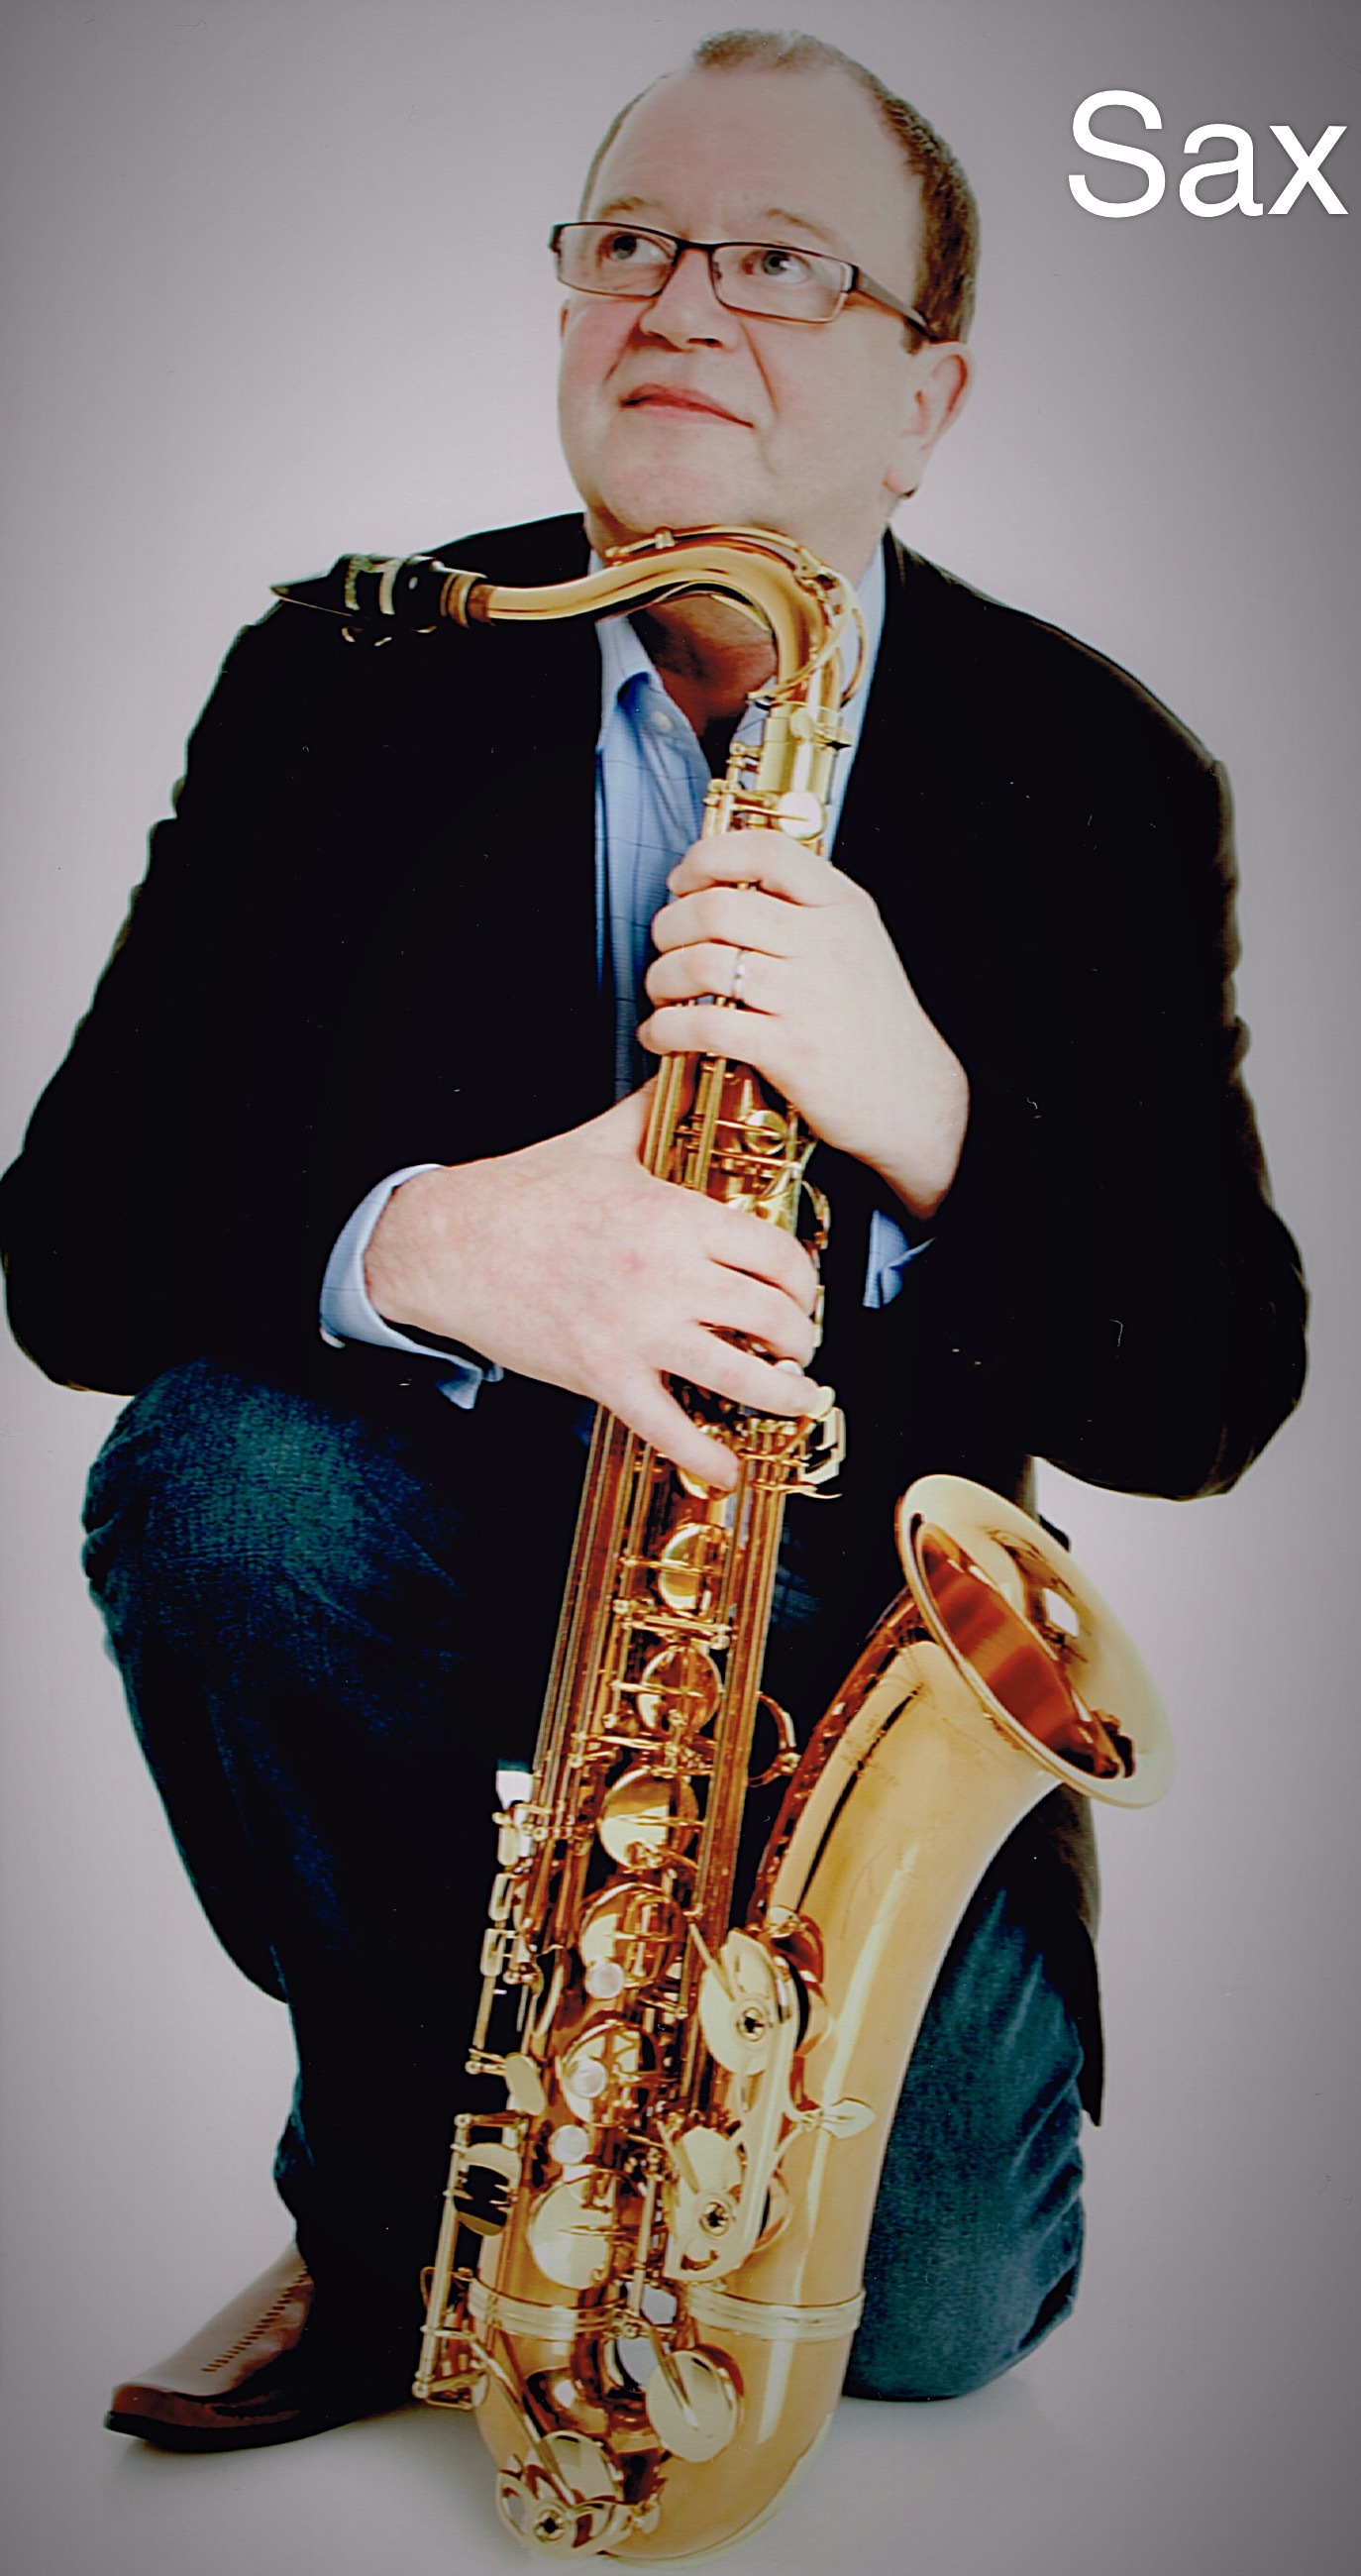 Saxophonist Ken in Ponteland, Northumberland